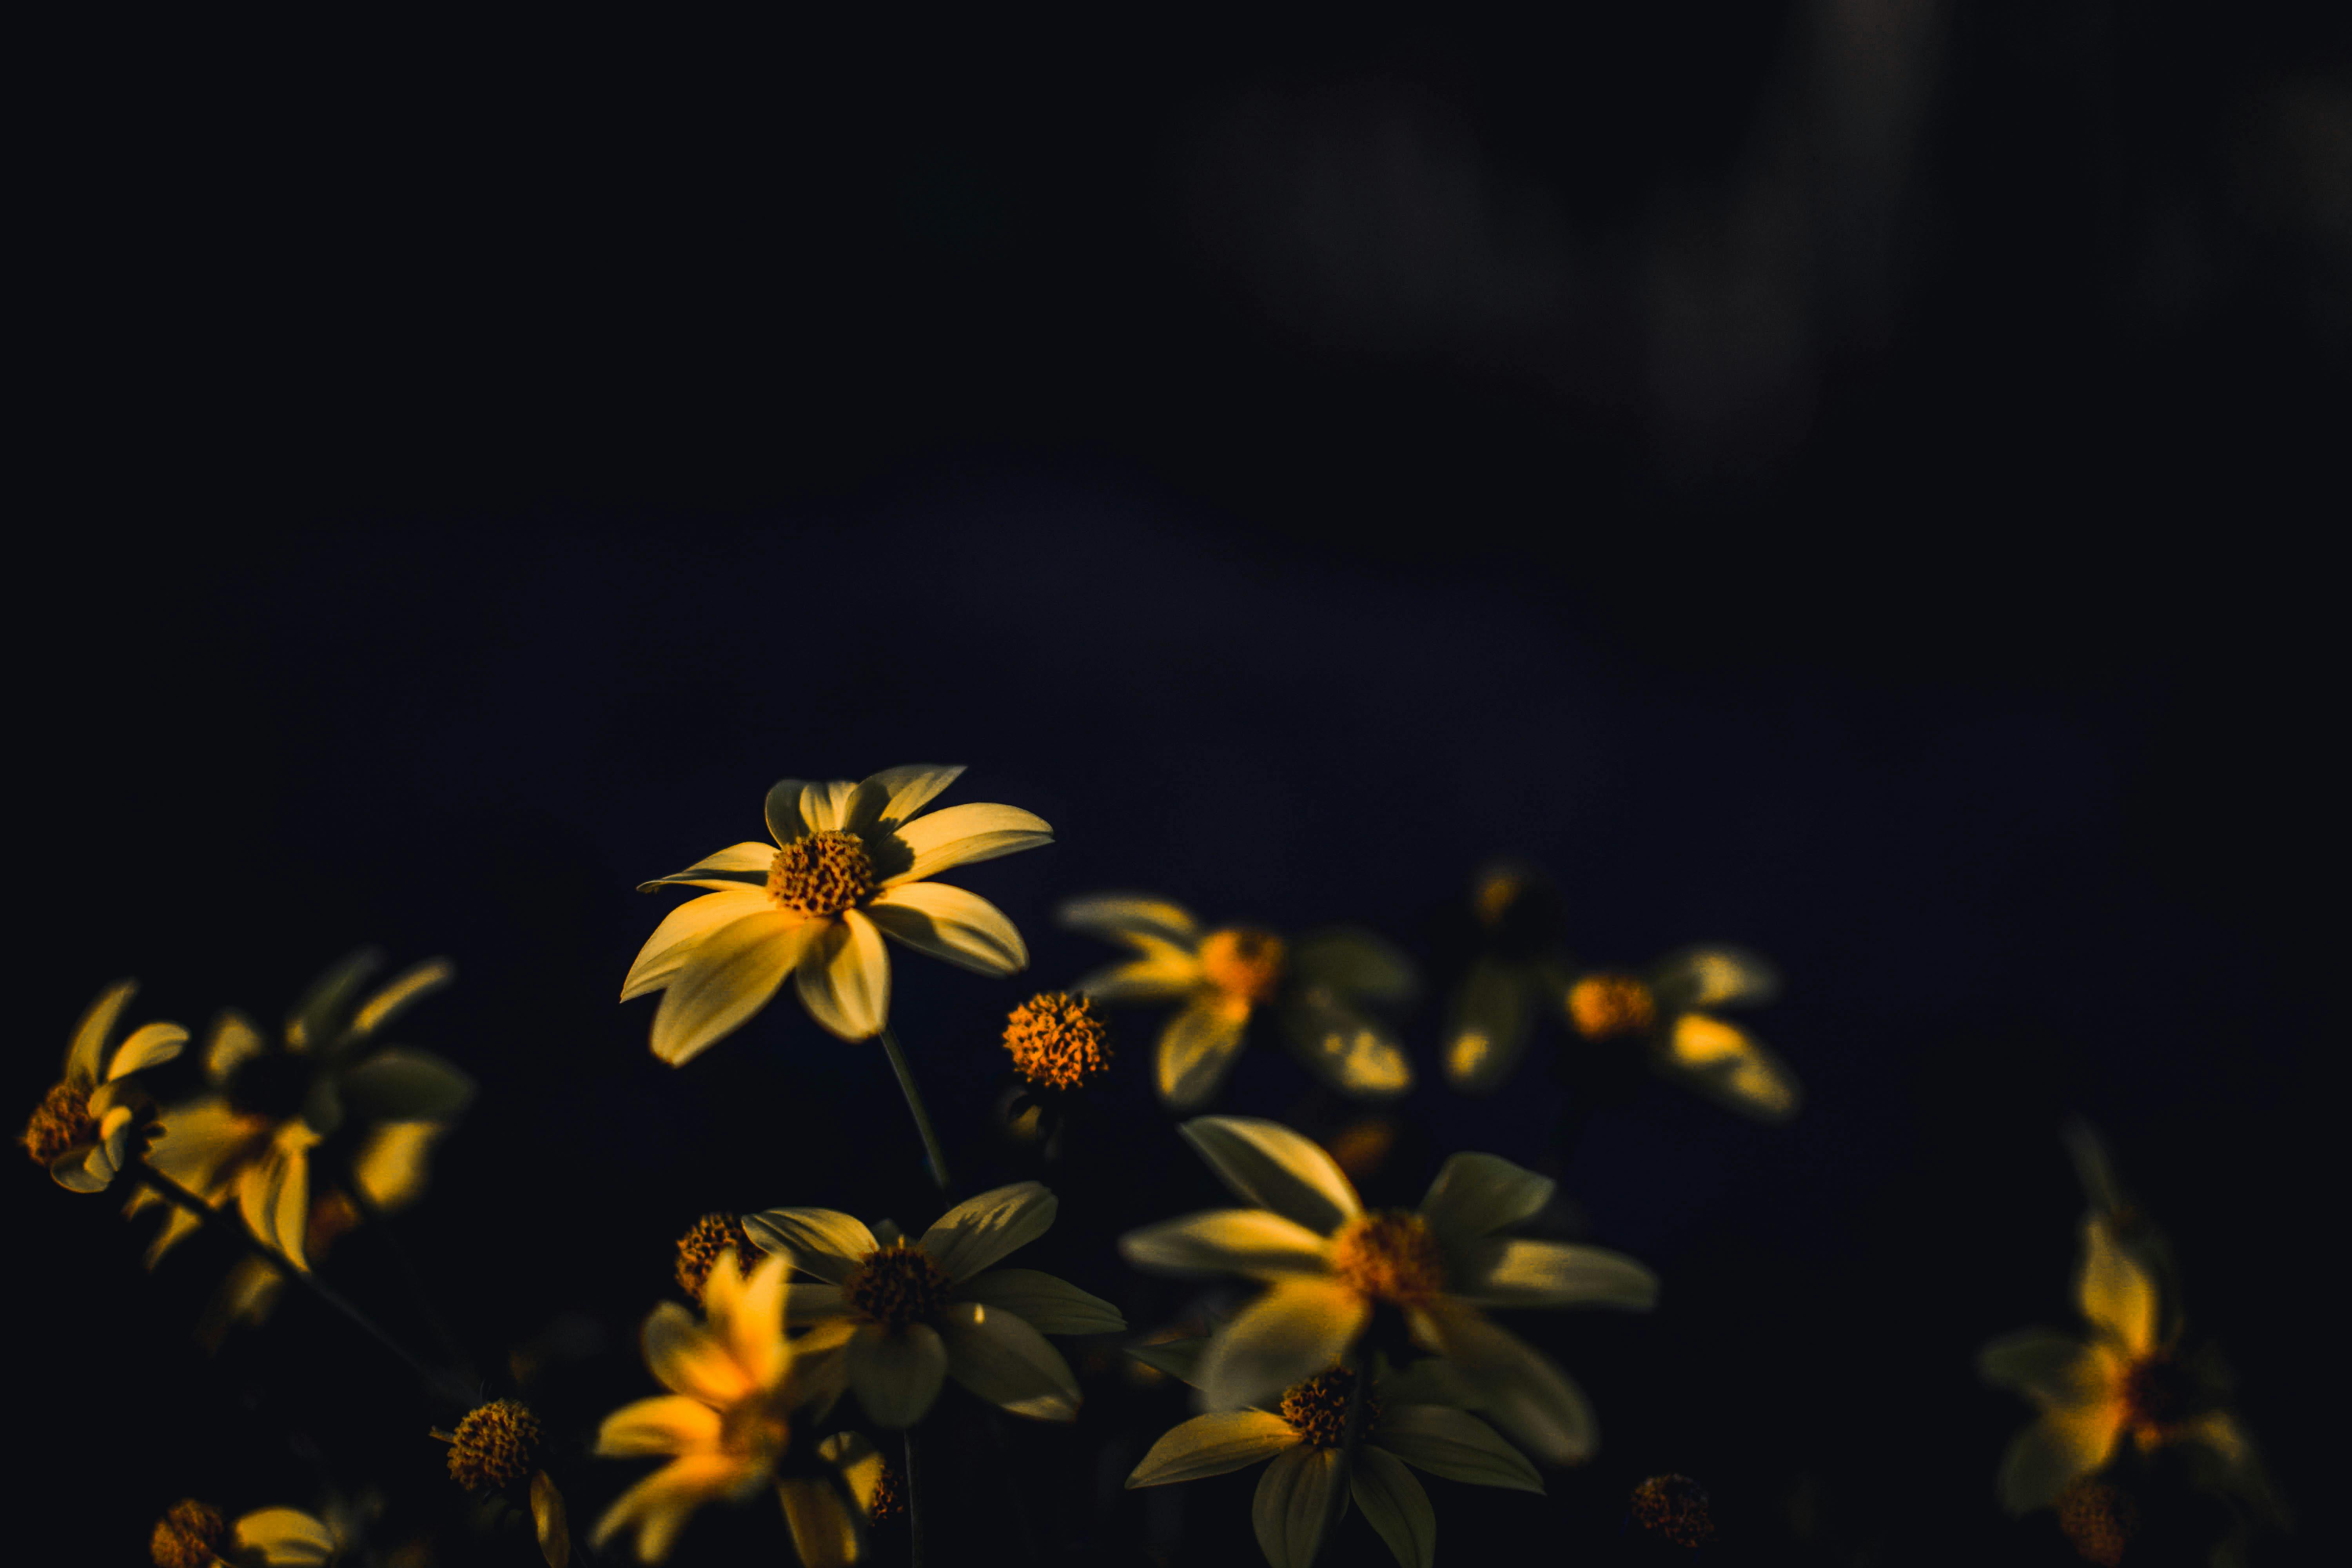 1000+ Beautiful Yellow Flowers Photos · Pexels · Free ...
